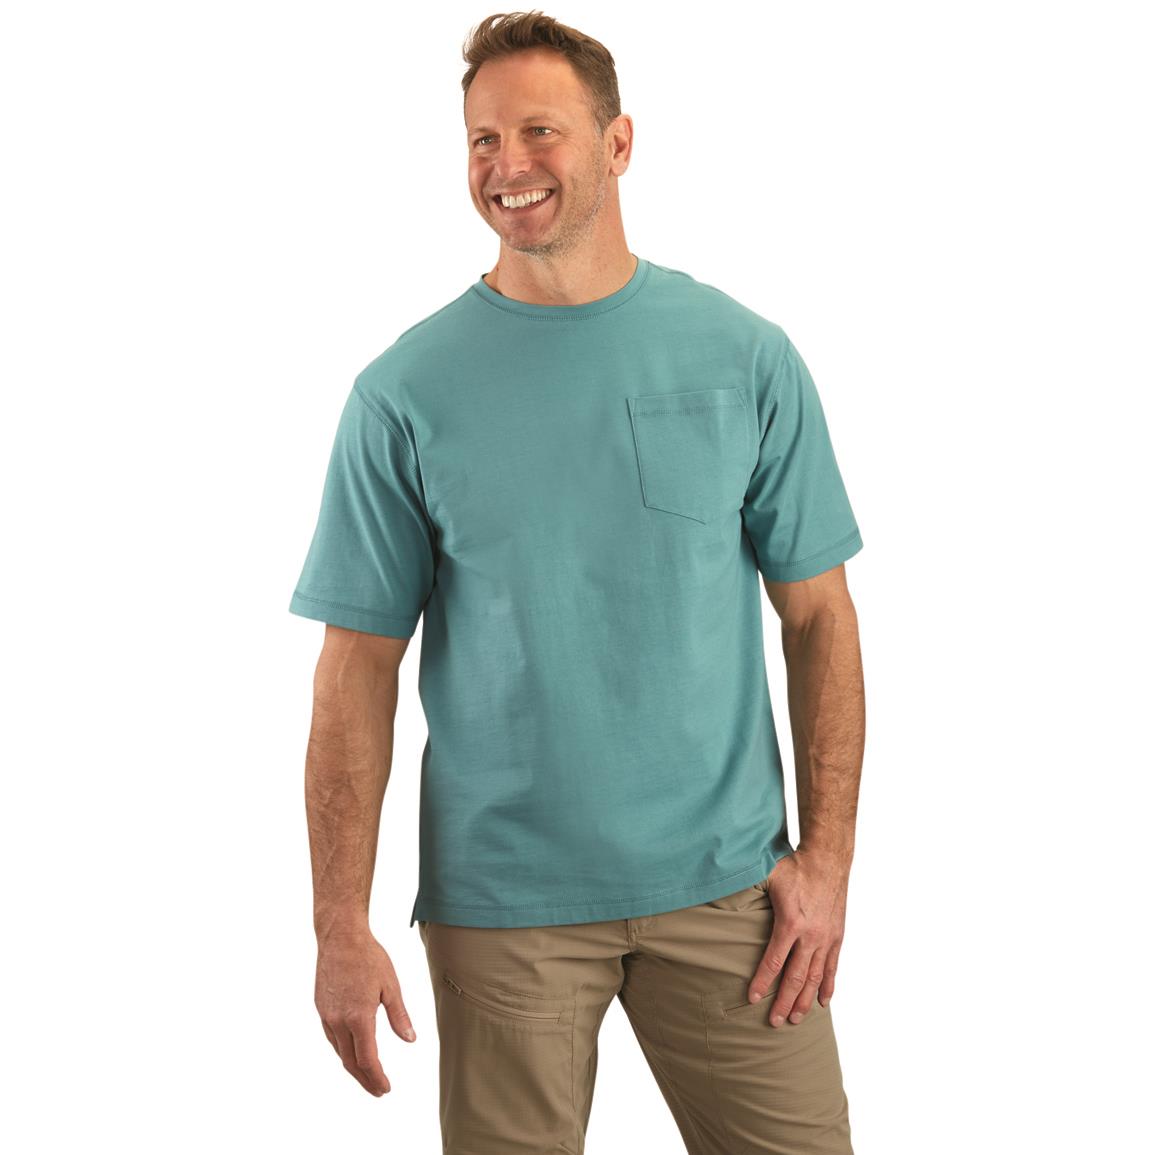 Guide Gear Men's Stain Kicker Short Sleeve Pocket T Shirt With Teflon, Oil Blue